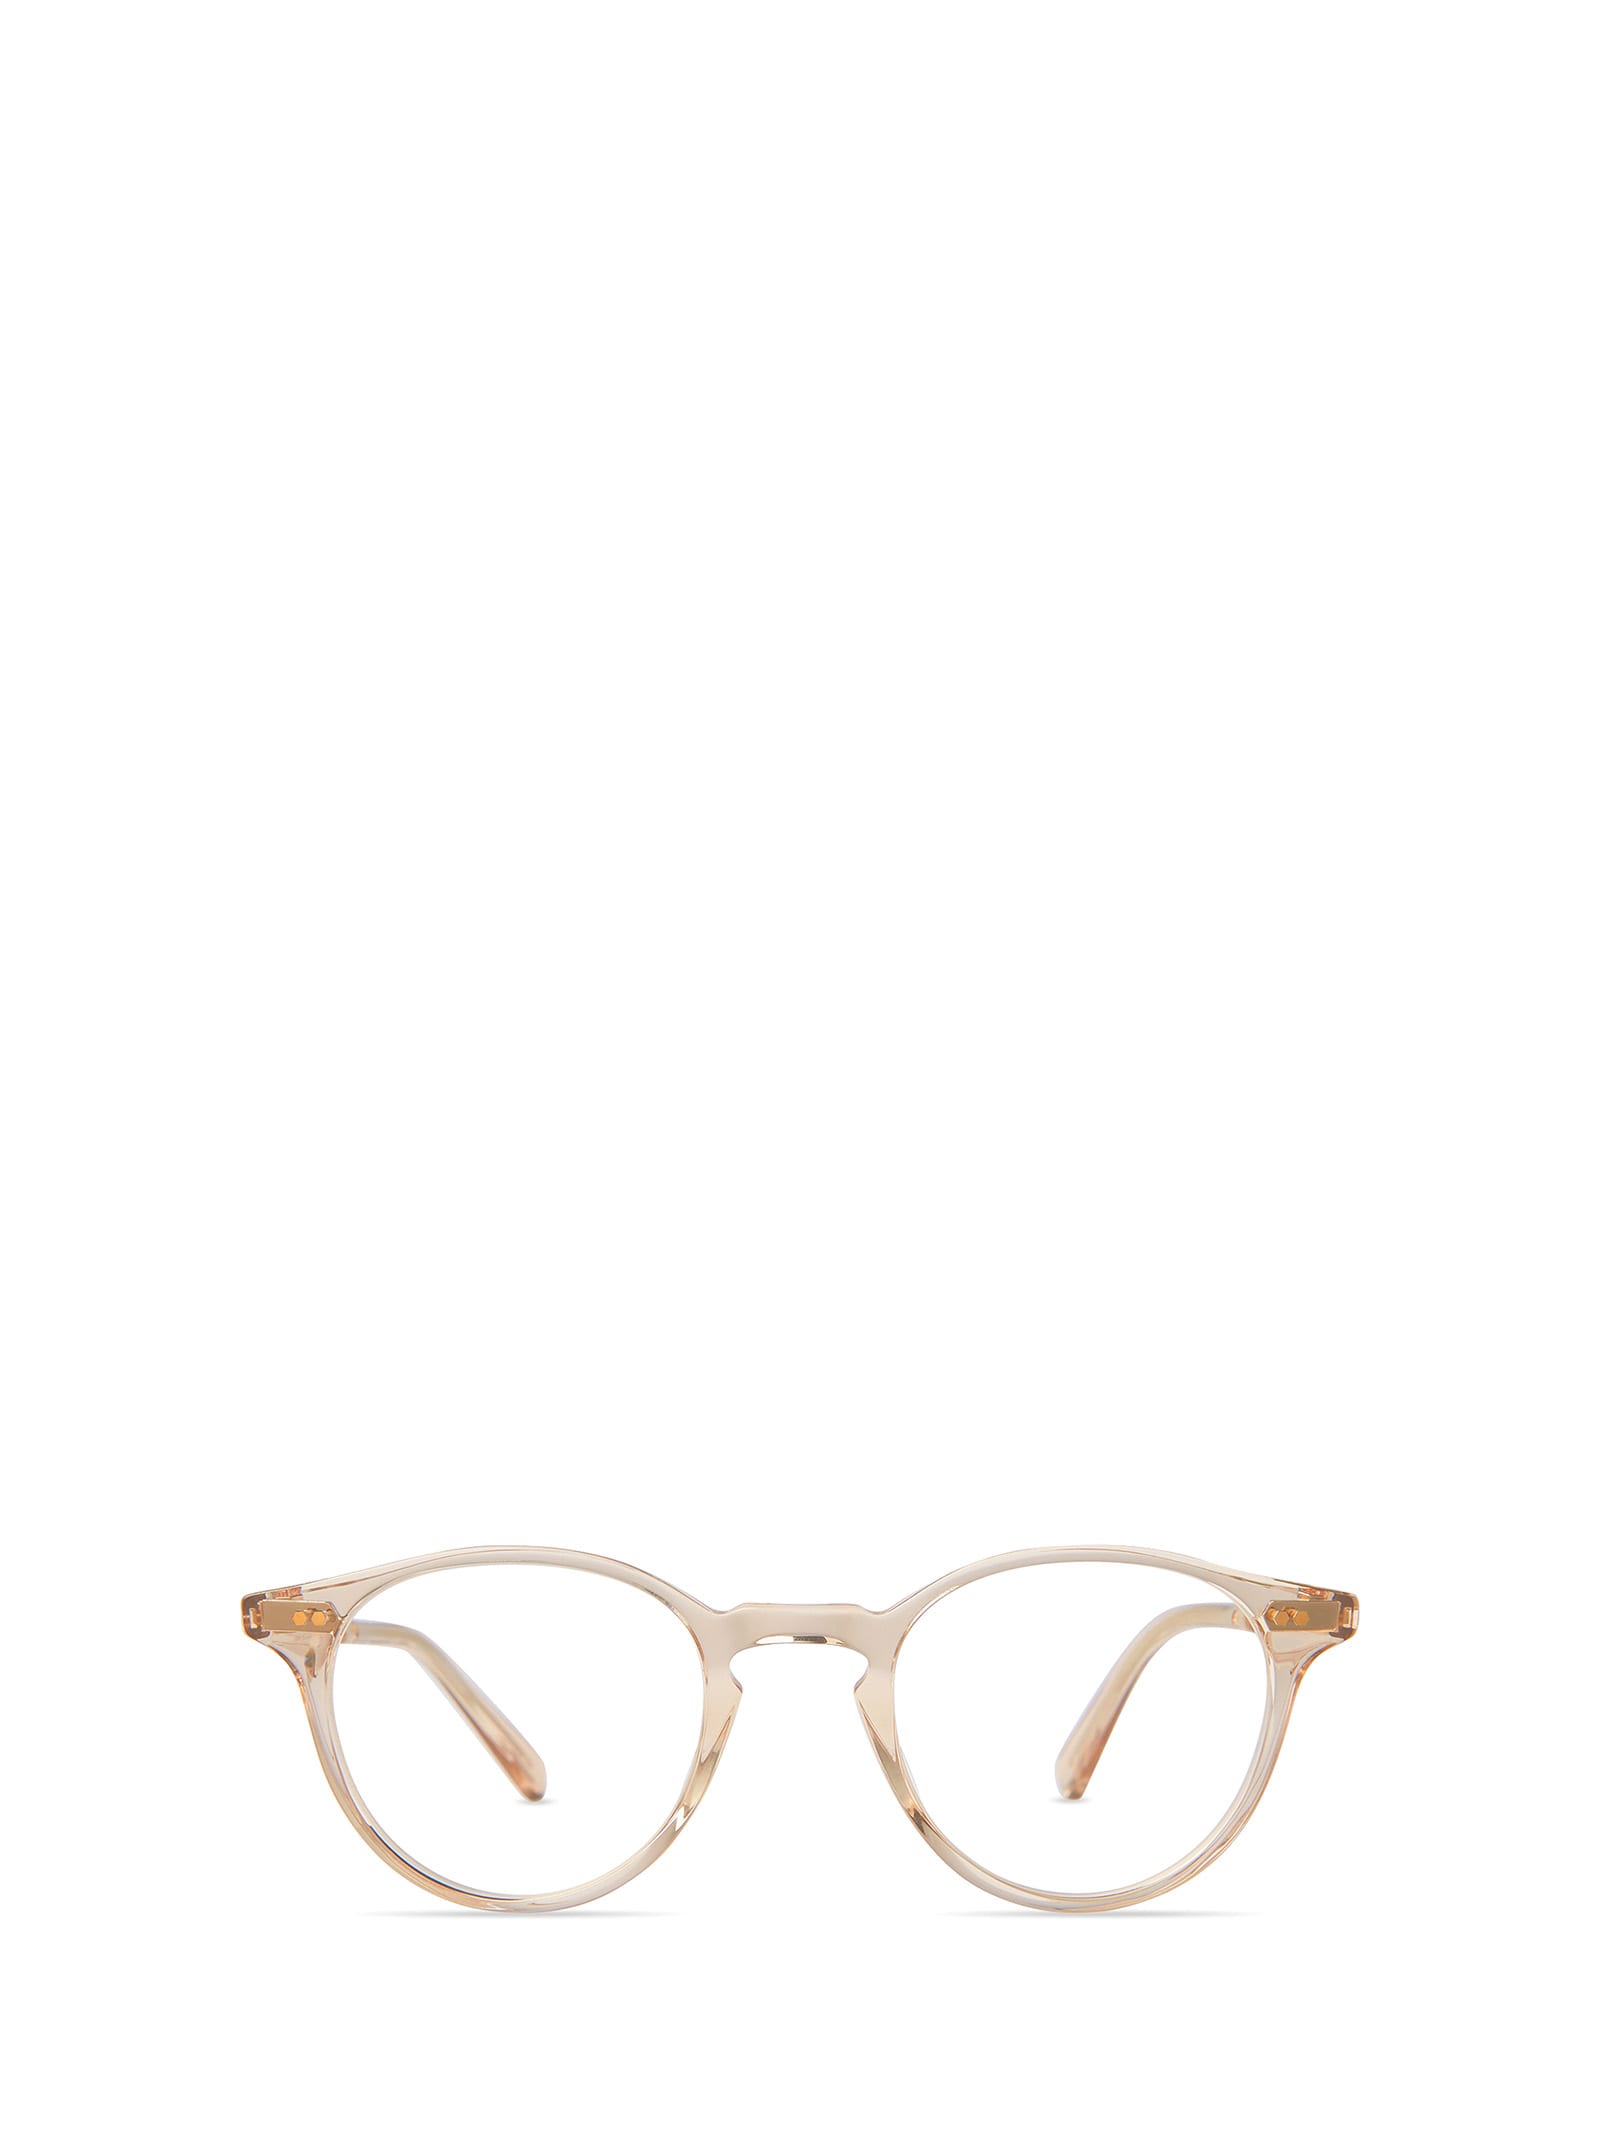 Marmont C Dune-white Gold Glasses